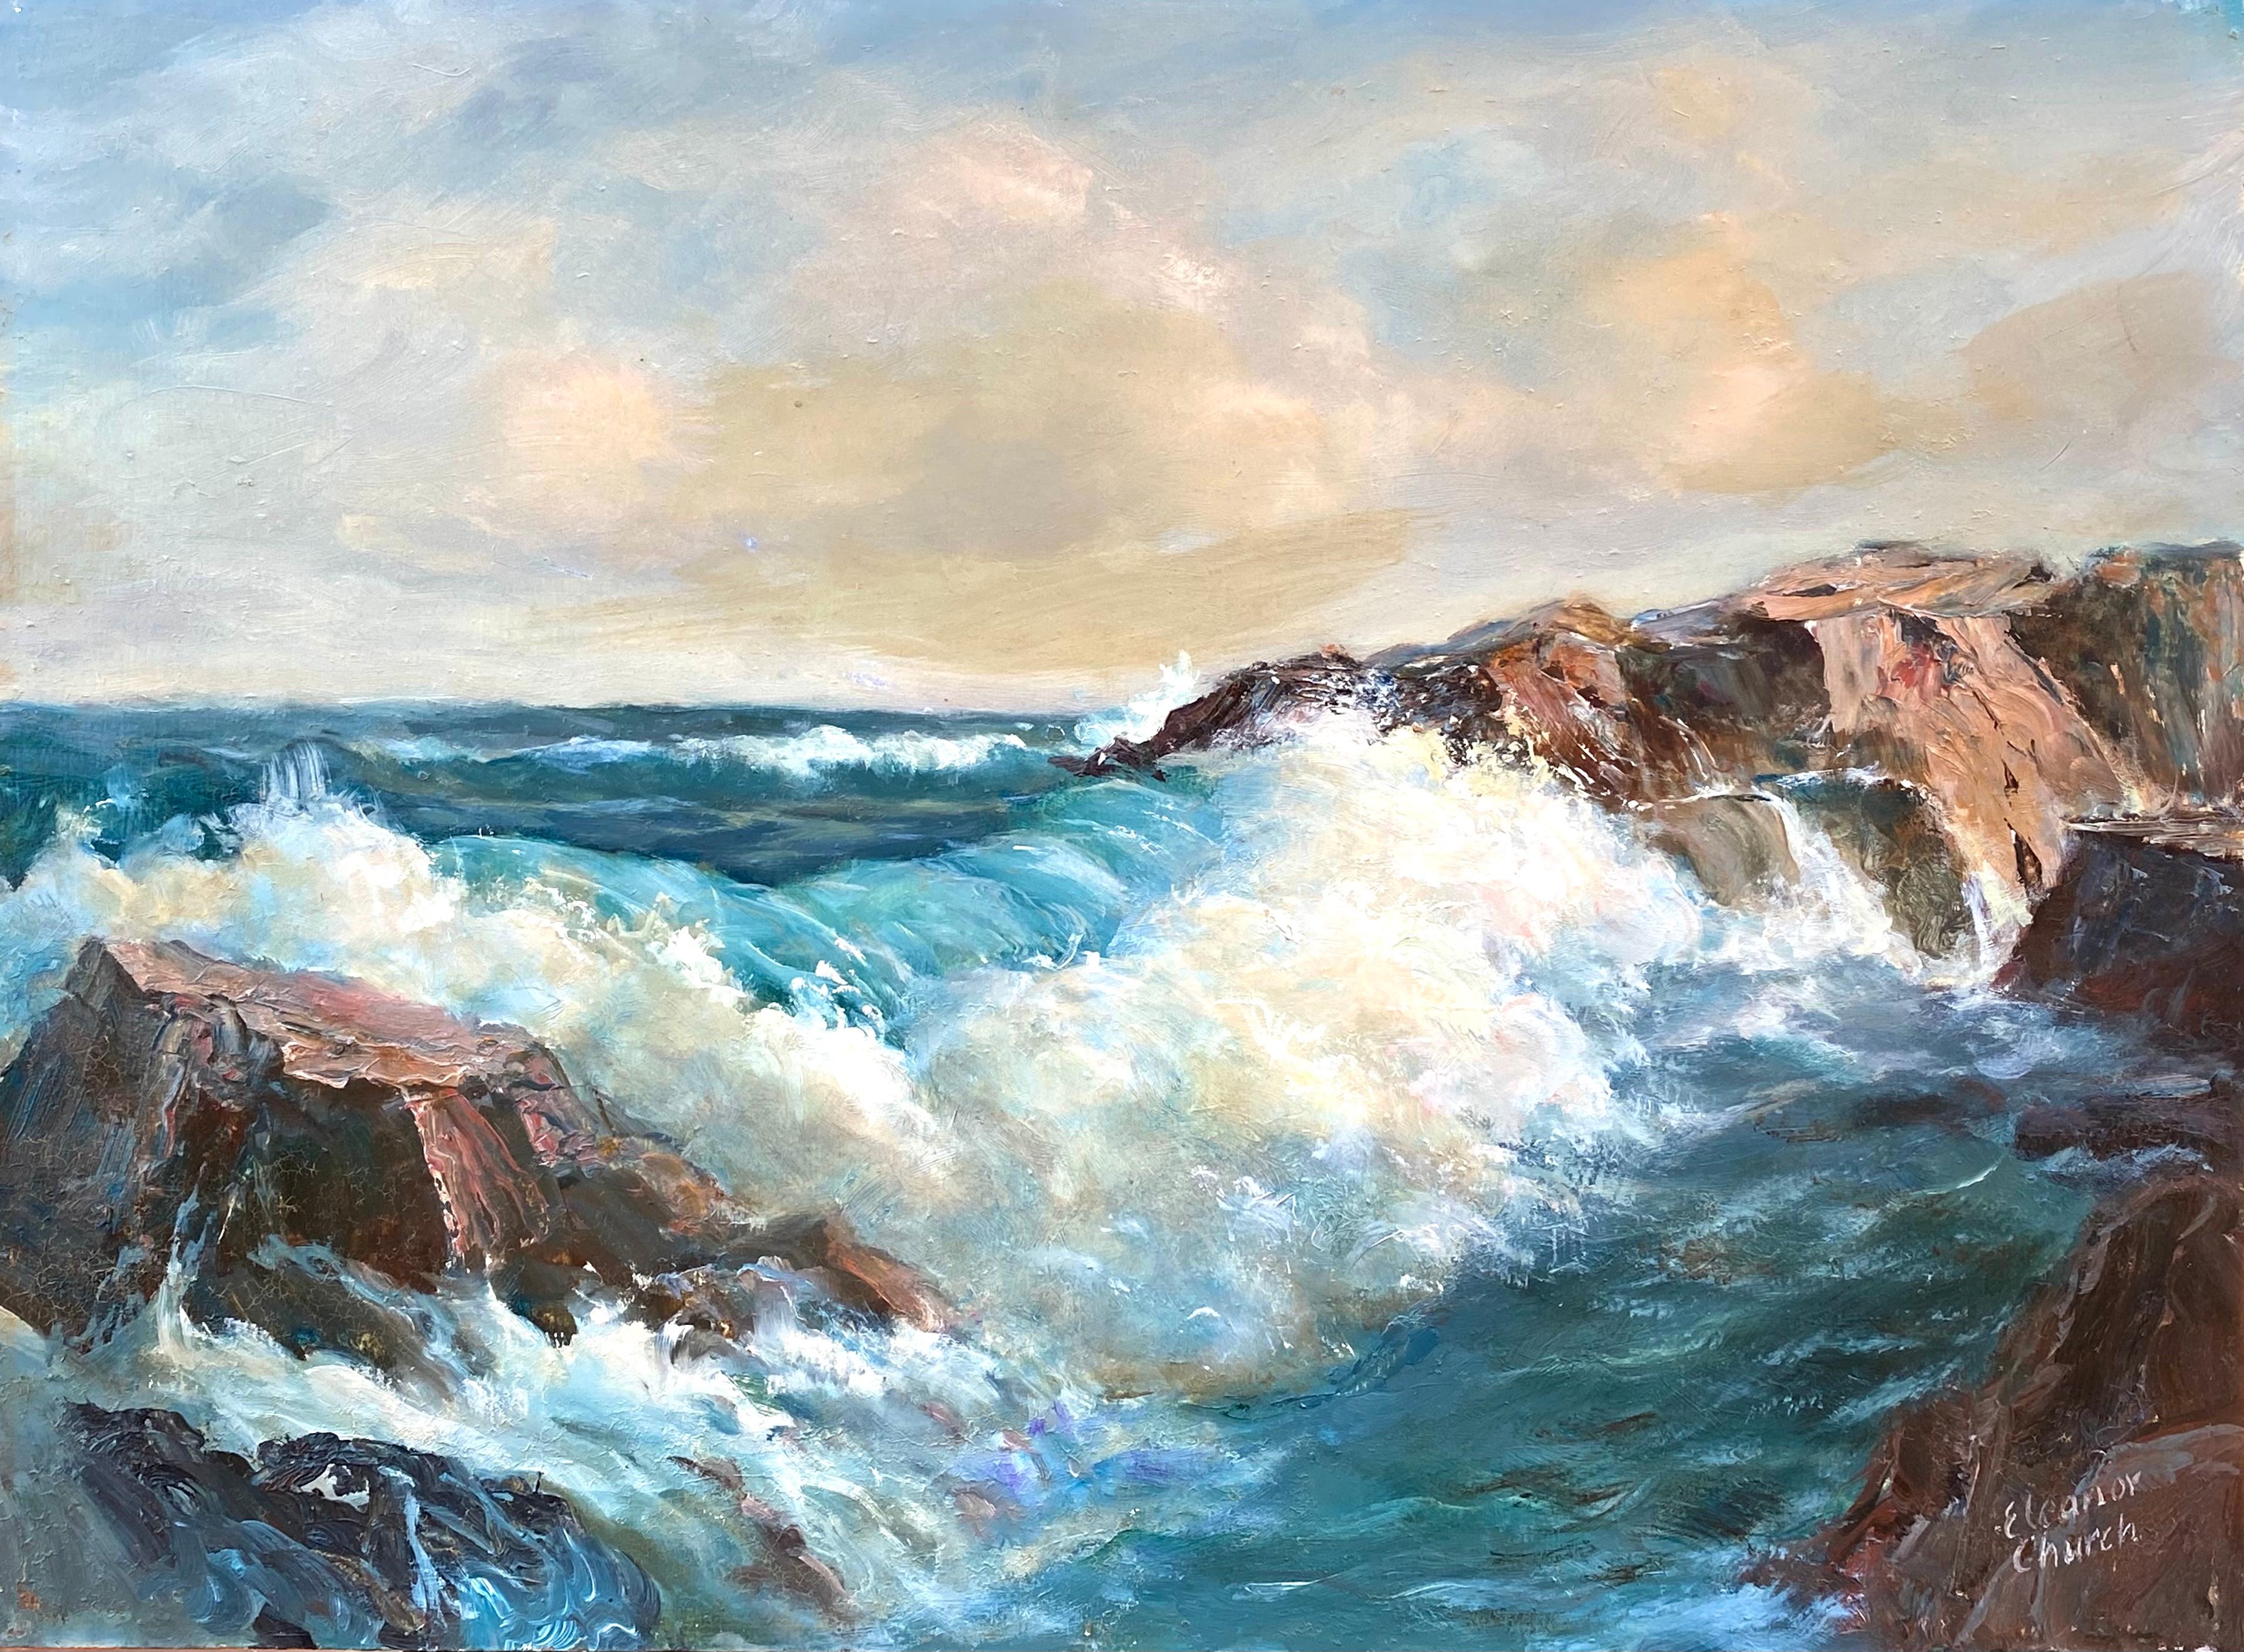 “Crashing Surf” - Painting by Eleanor Church